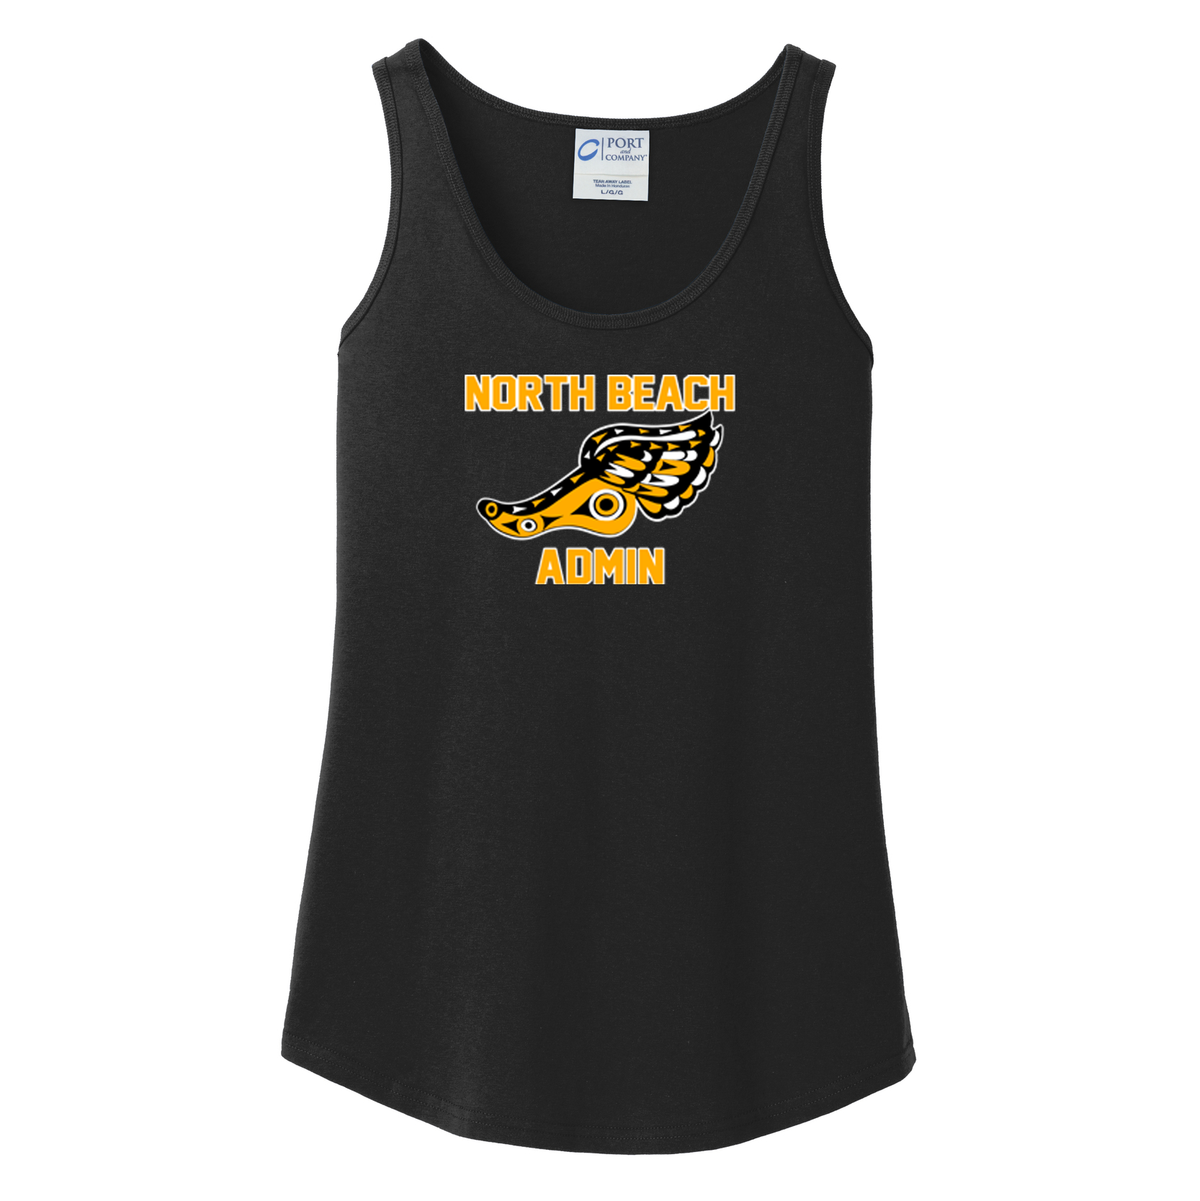 North Beach Admin  Women's Tank Top